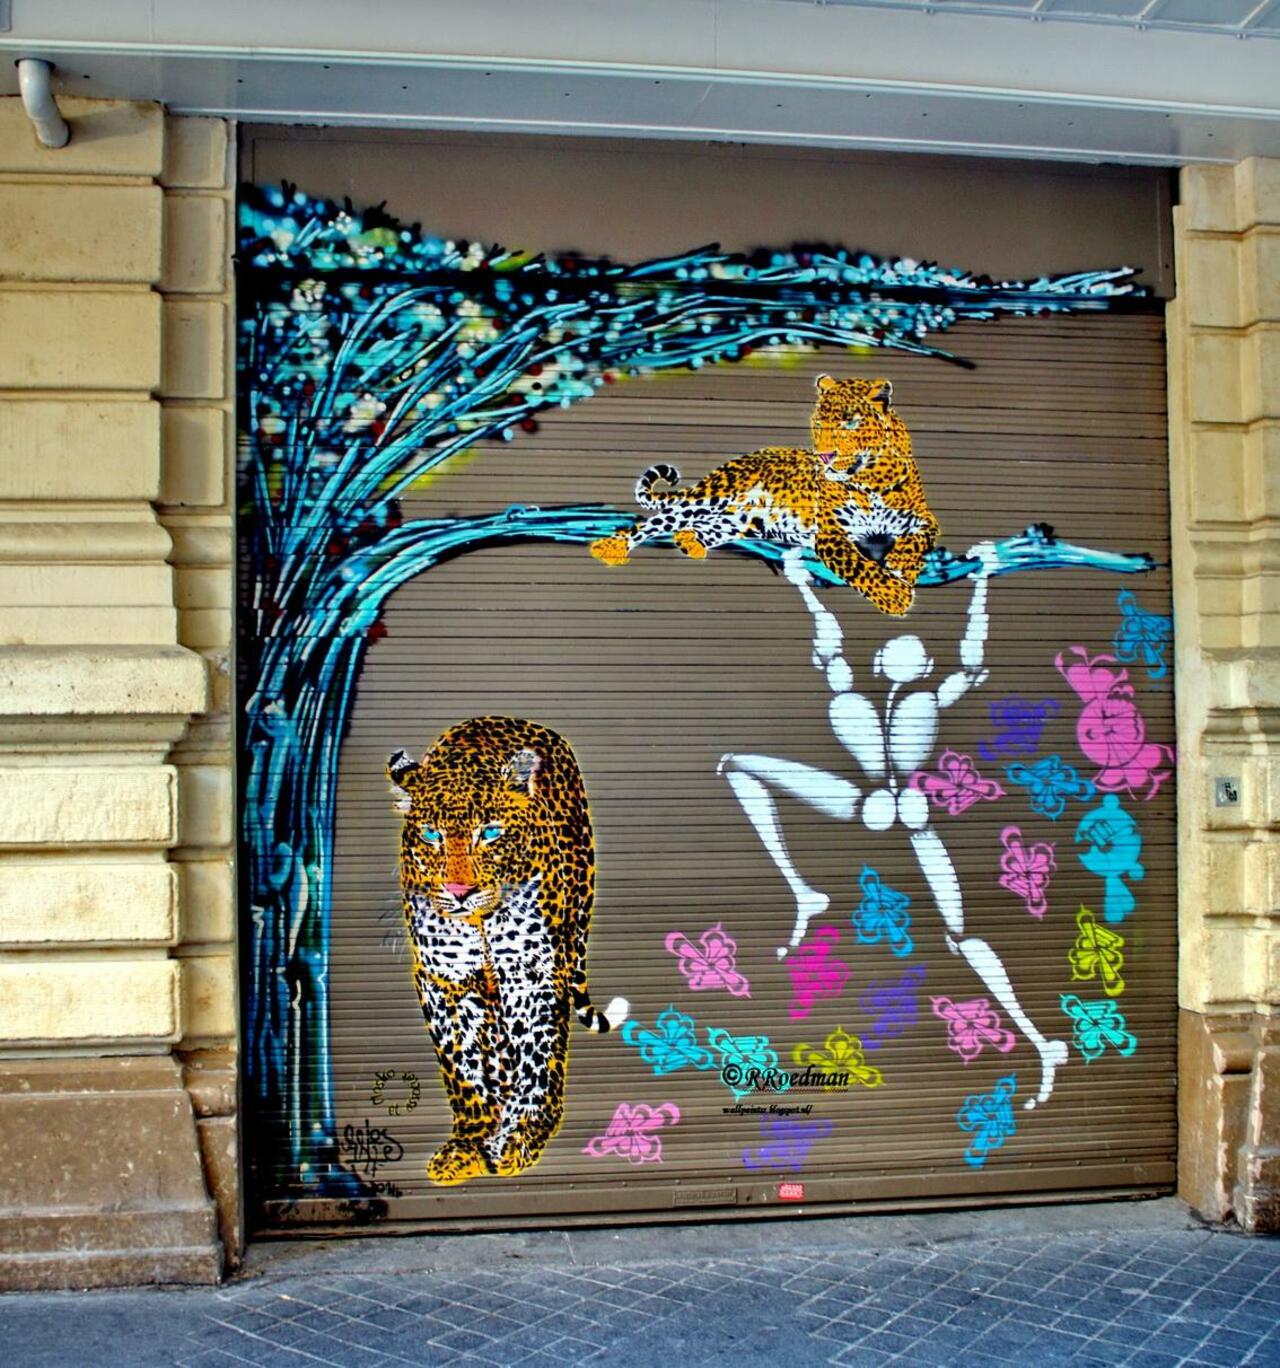 #streetart #graffiti #mural leopards in #Paris #MoskoAssociés,3 pics at http://wallpaintss.blogspot.nl http://t.co/SBvOJYrY1d